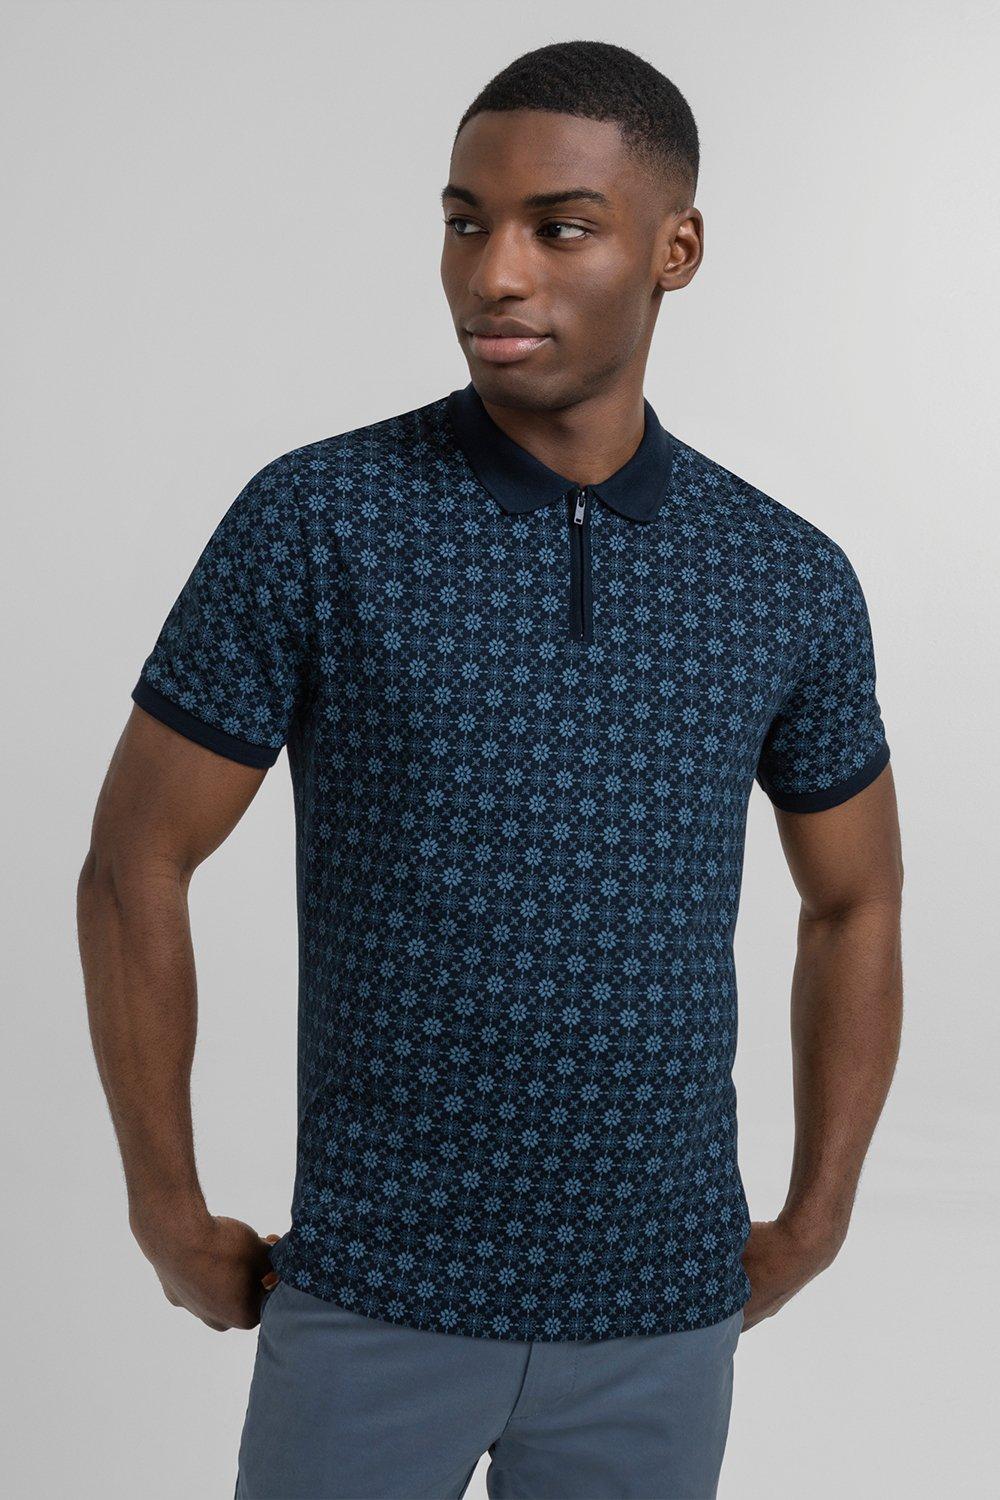 Темно-синяя рубашка-поло с коротким рукавом с геометрическим цветочным принтом Steel & Jelly, темно-синий